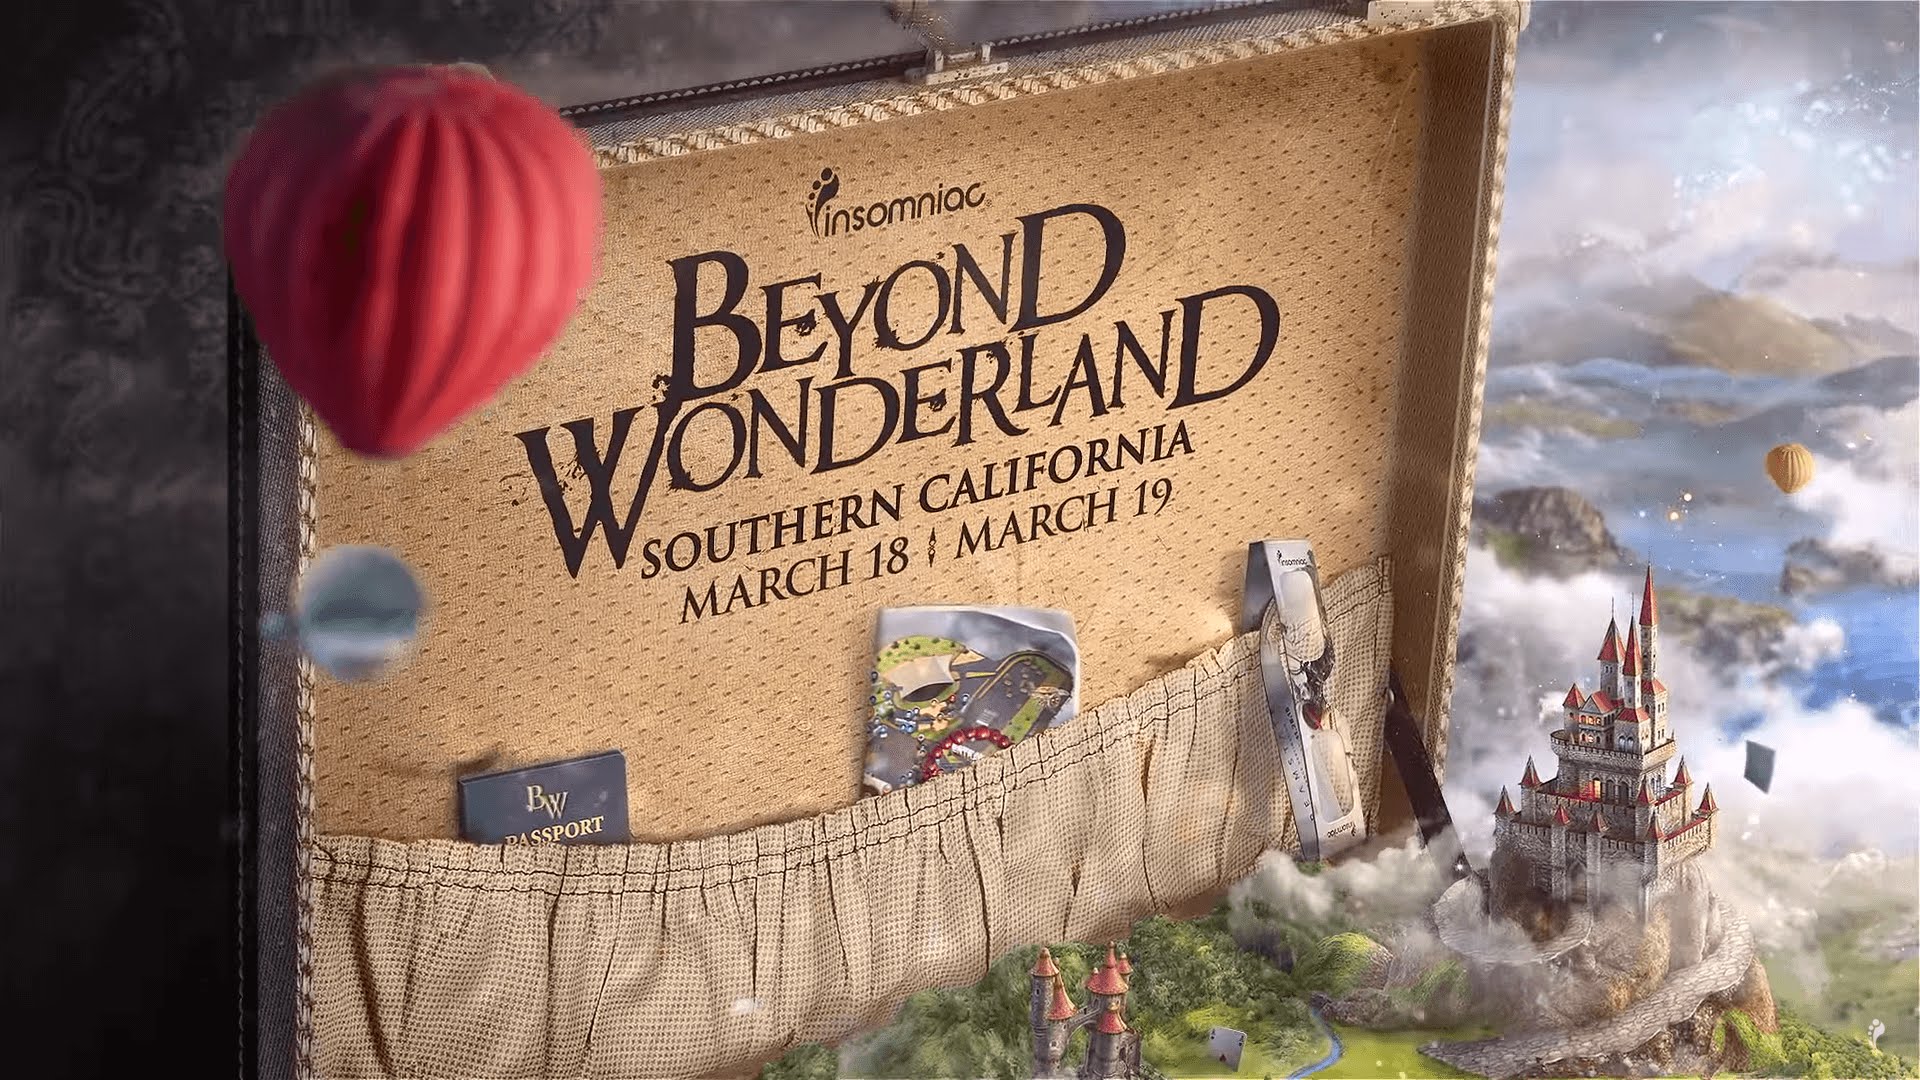 Beyond Wonderland SoCal 2016